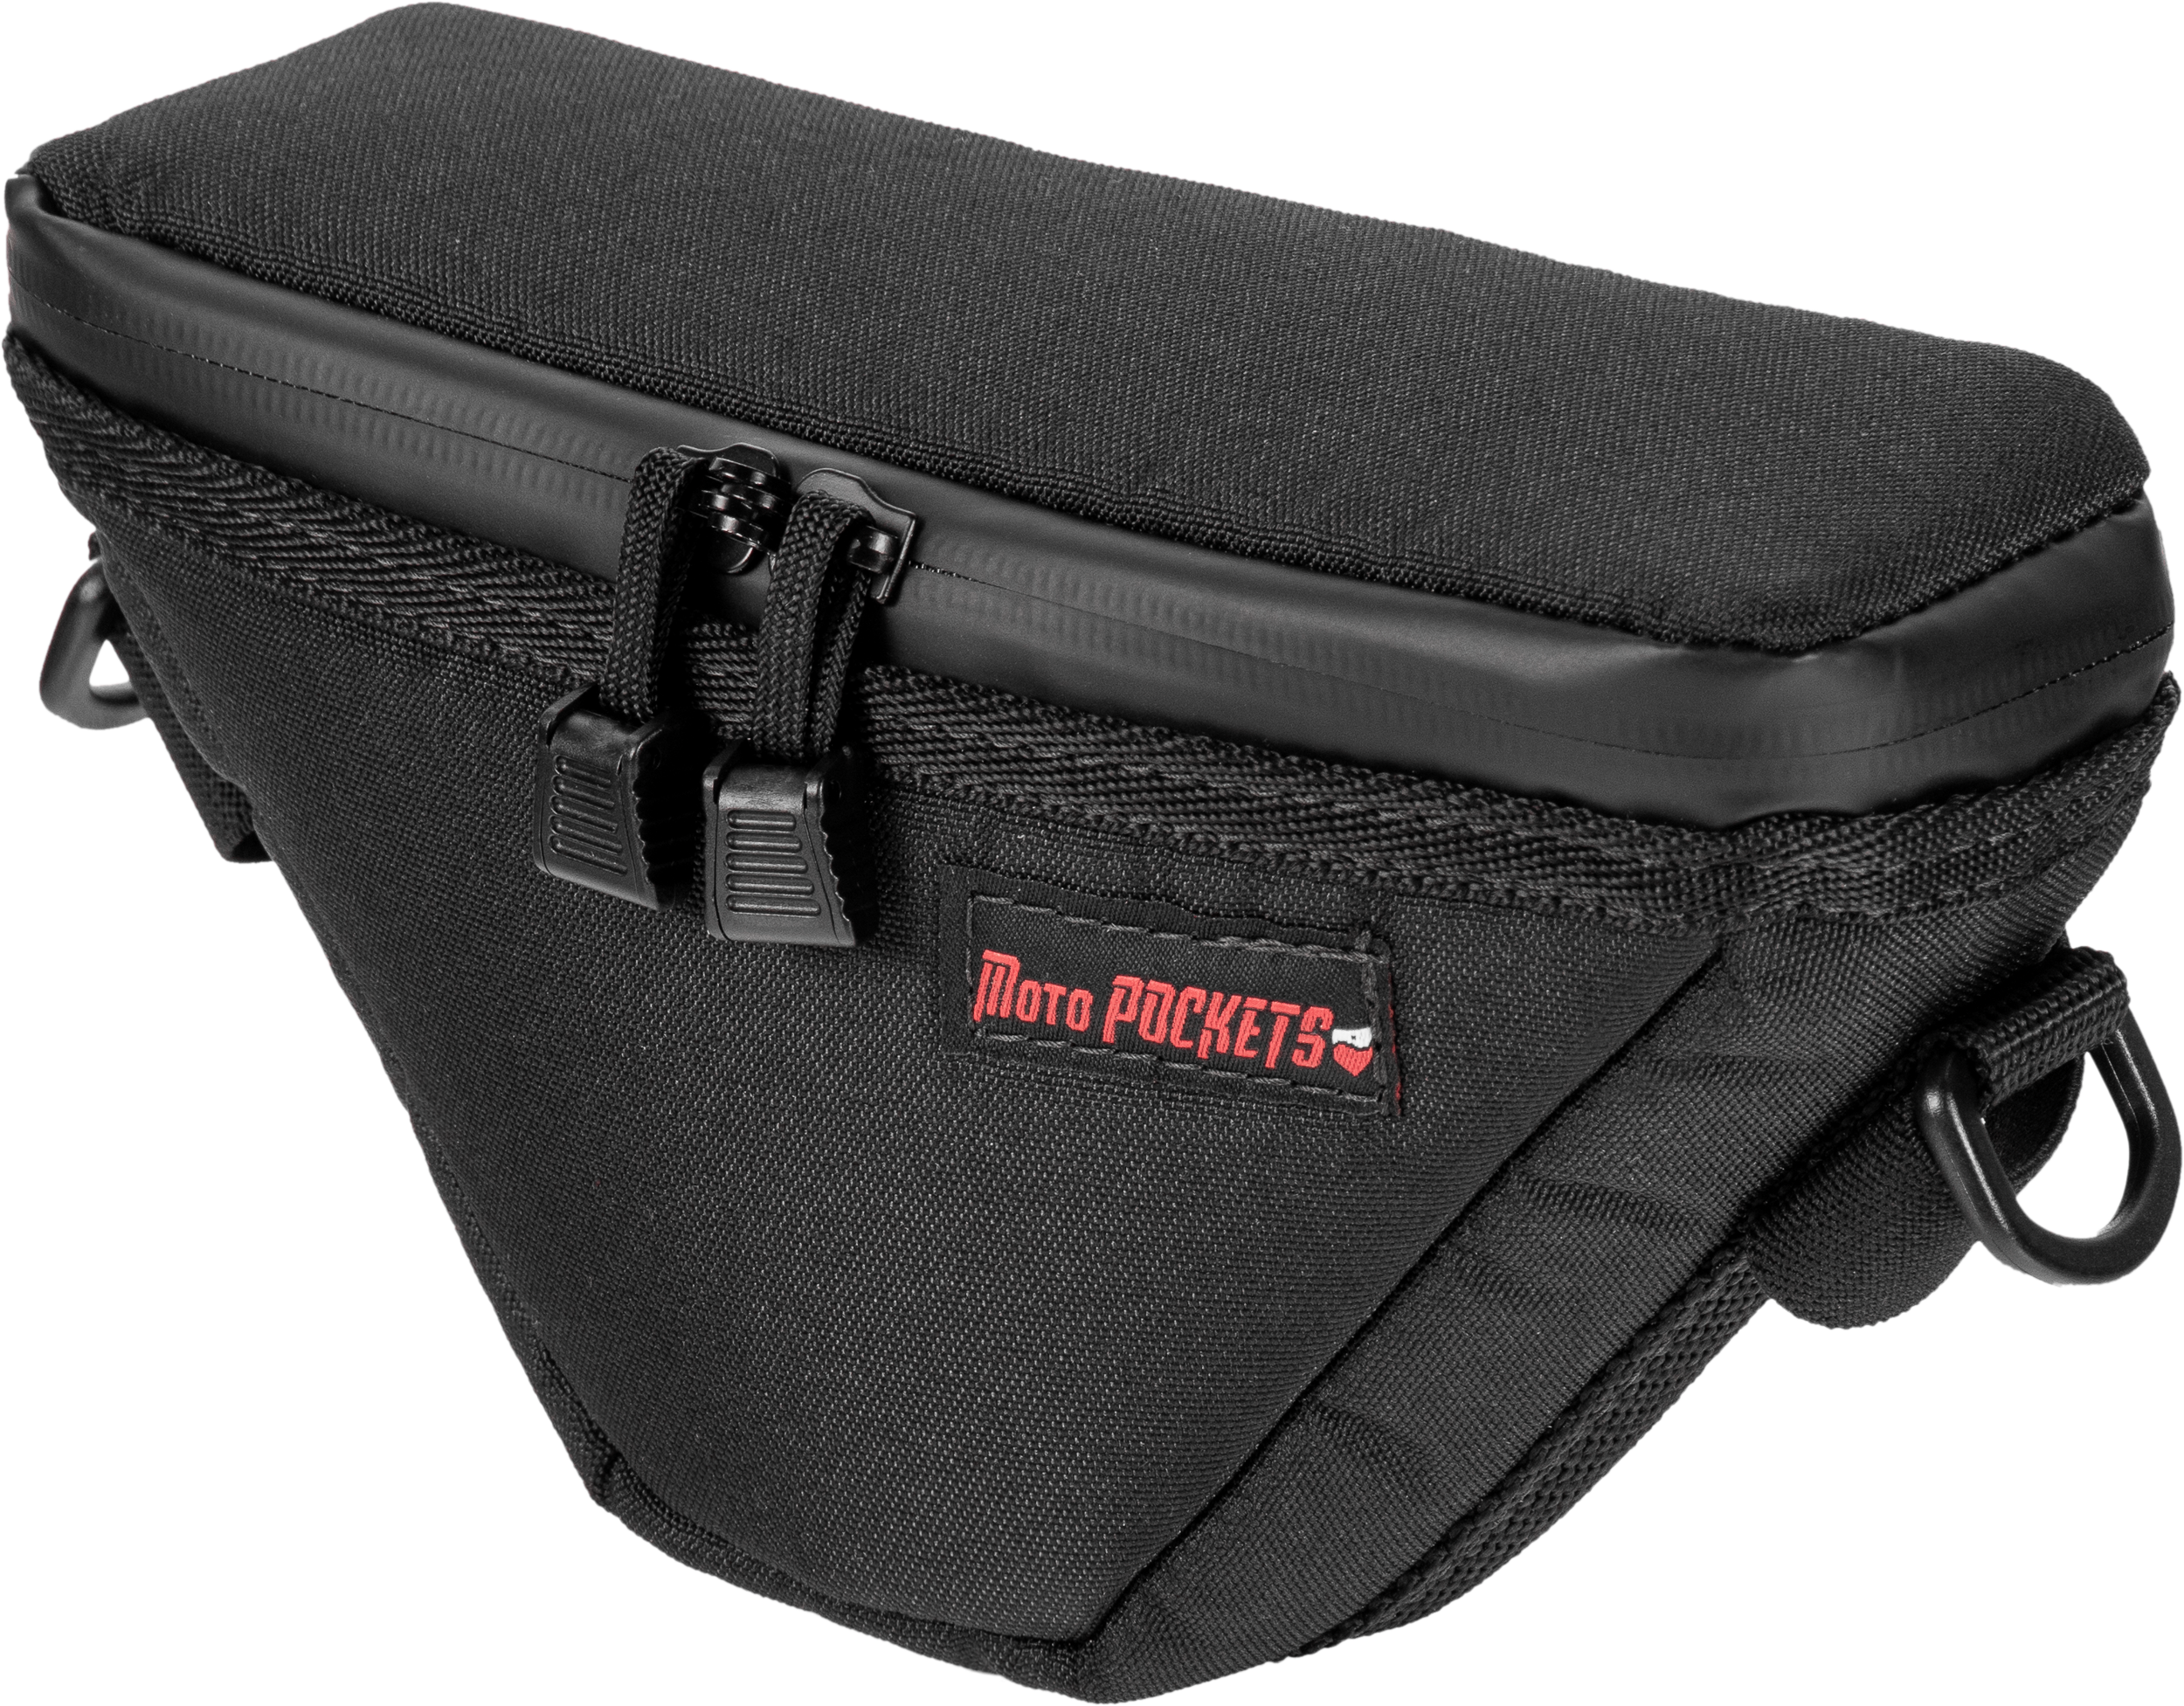 Moto Pockets - MOTO POCKETS Handlebar Bag 10019 - 852678827102